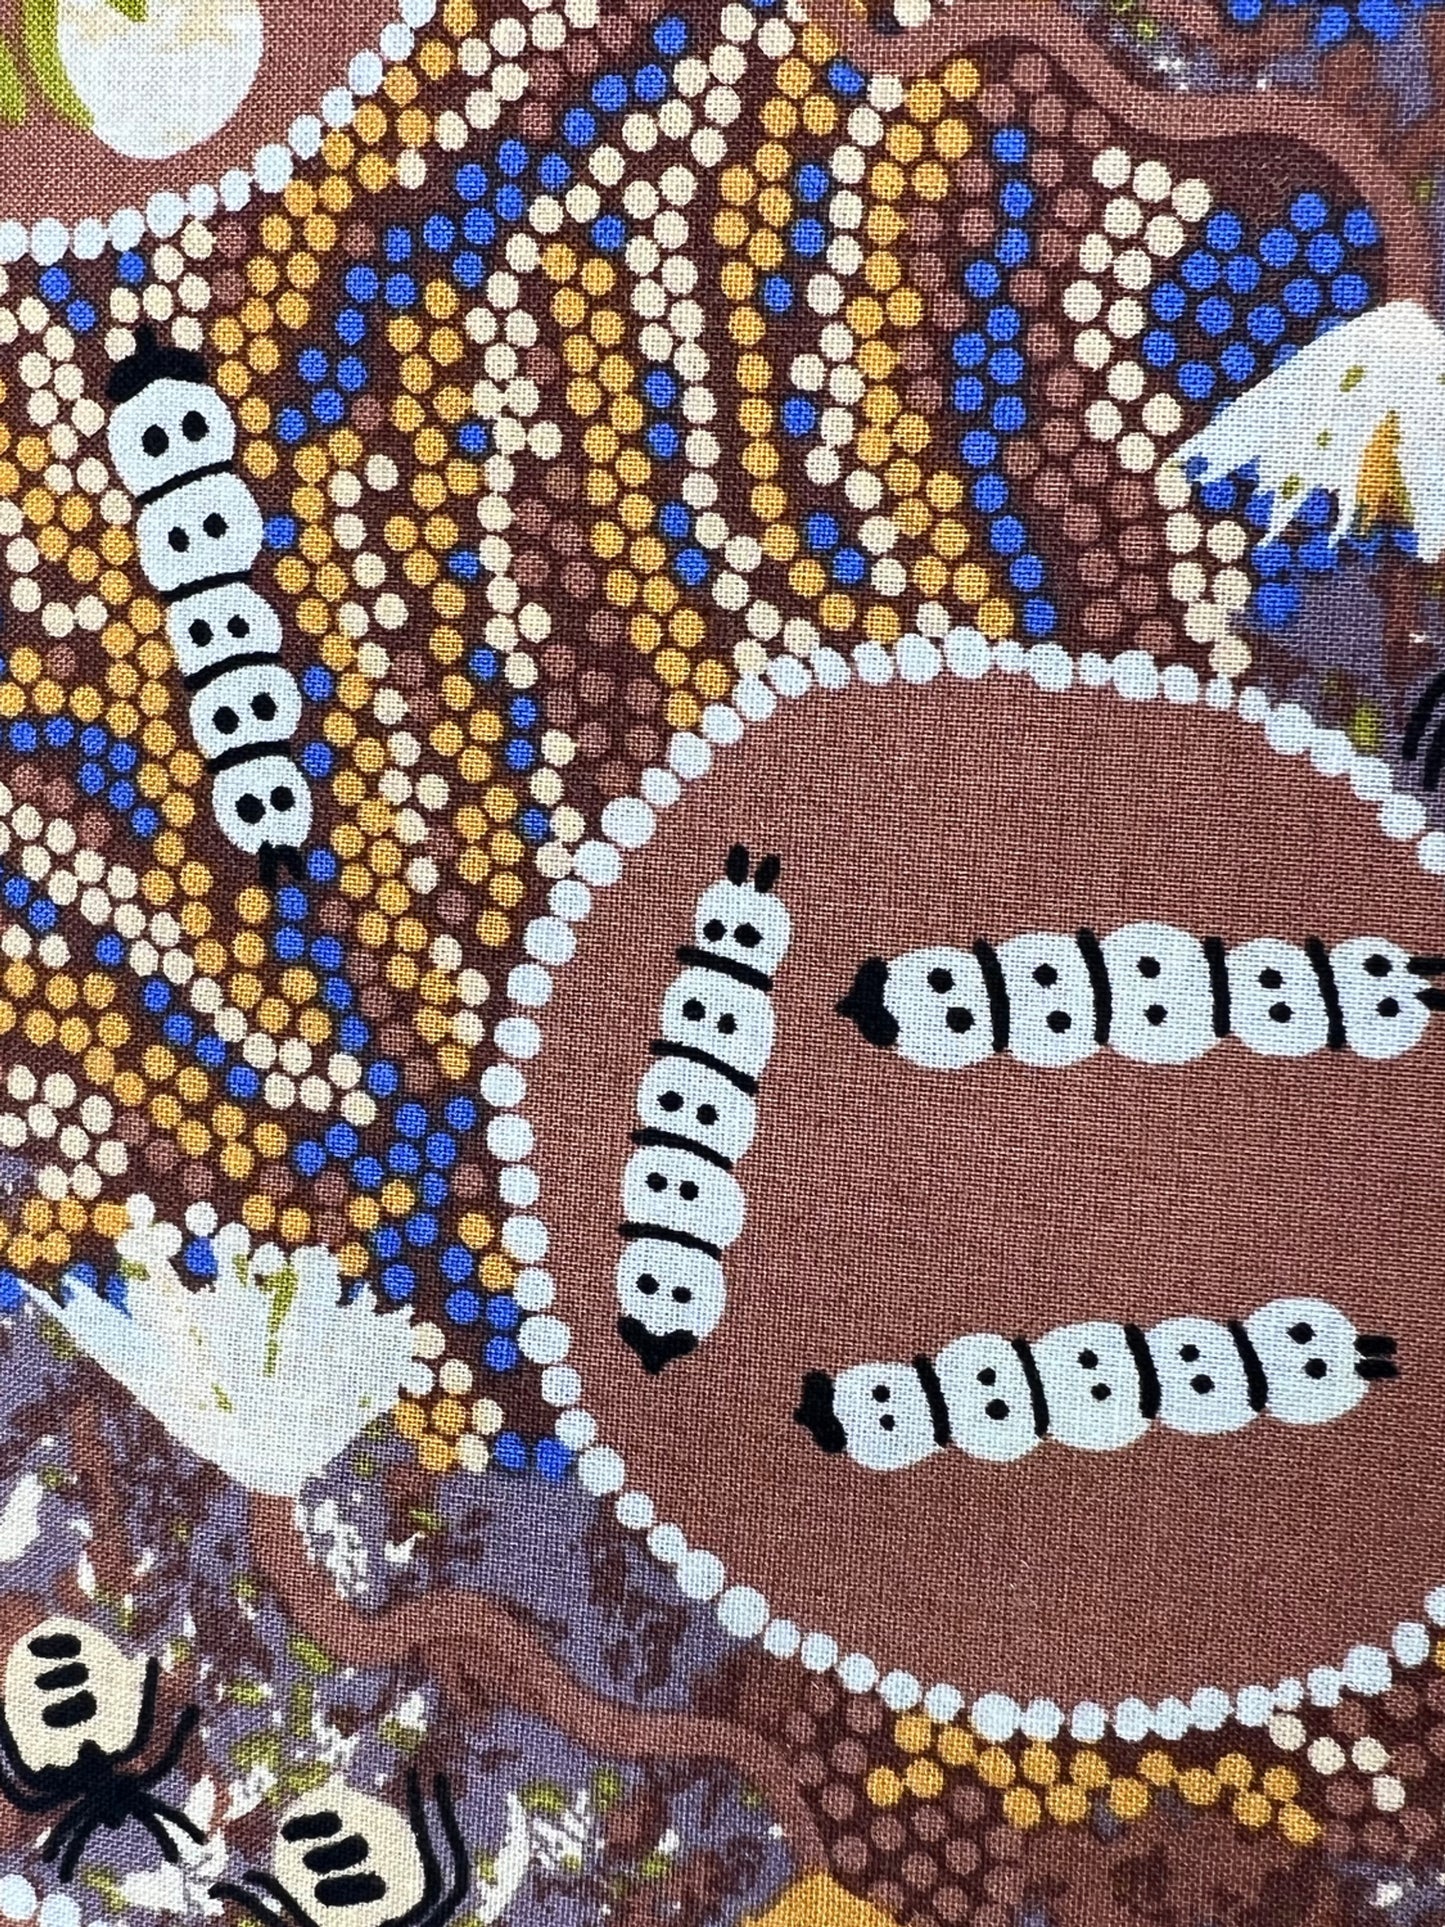 Australian aboriginal insect art mask